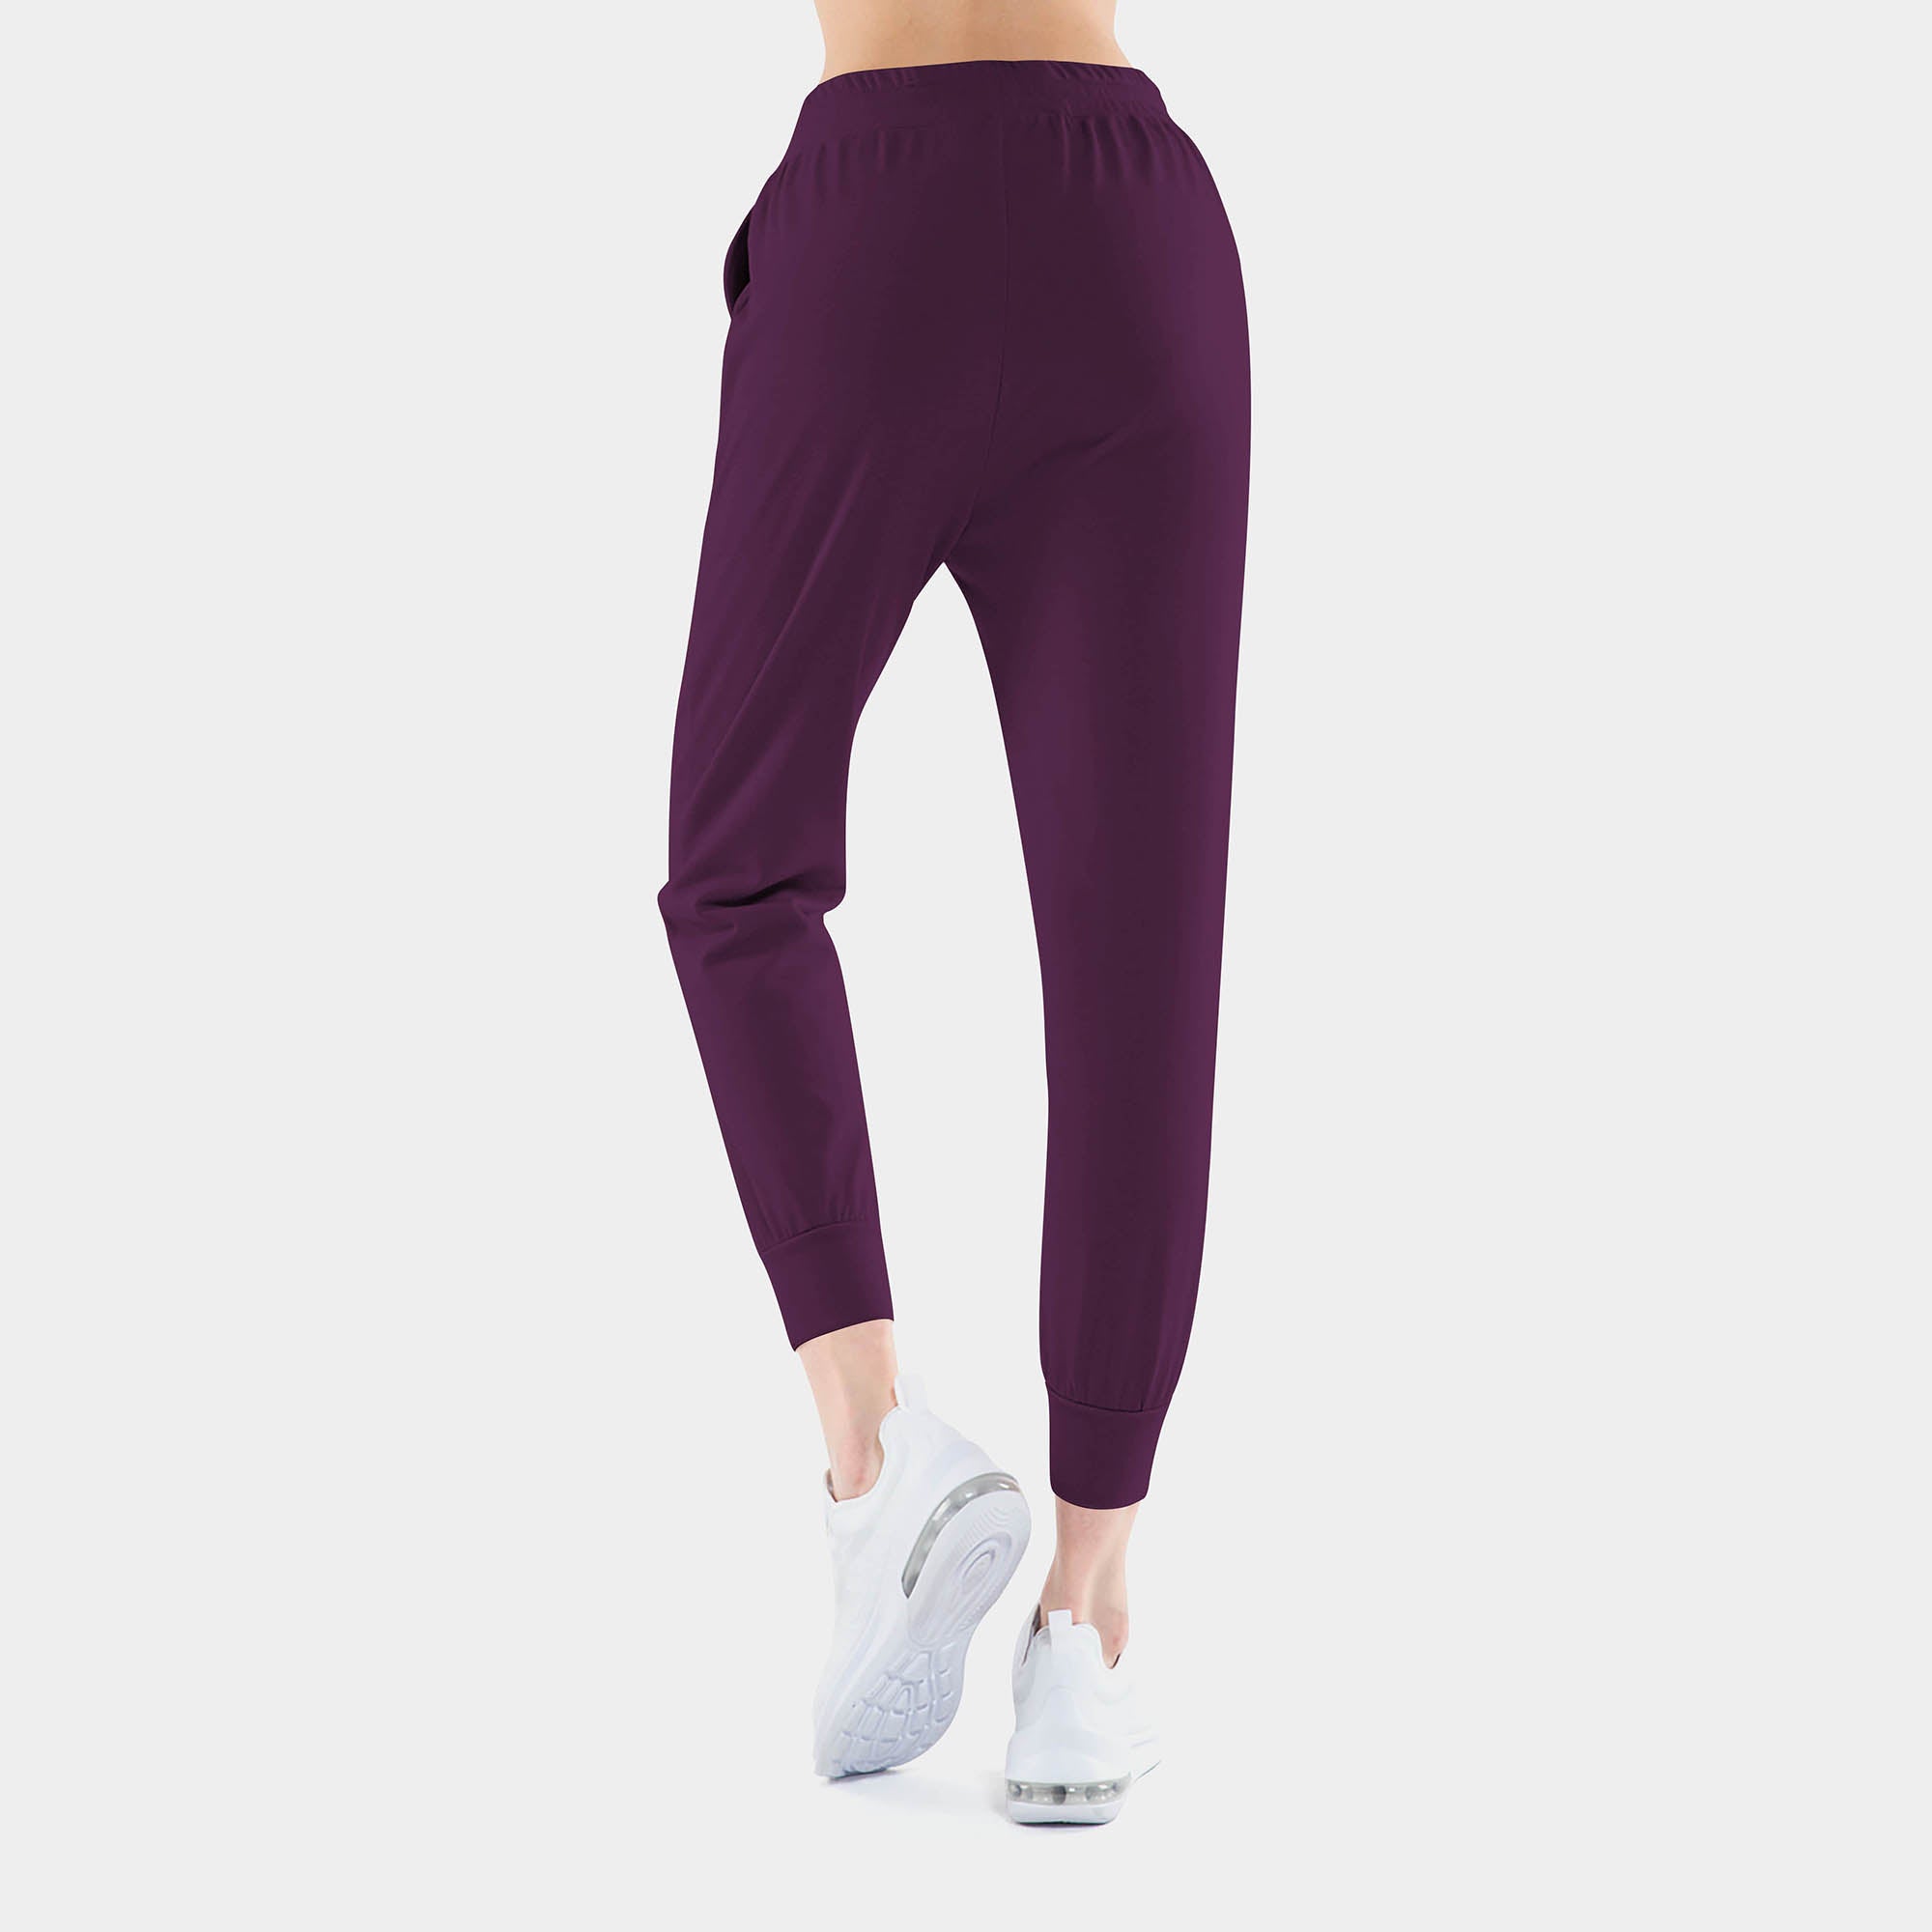 joggers_sweatpants_joggers for women_jogging pants_track pants_sweatpants women_pink sweatpants_jogging pants women_Purple